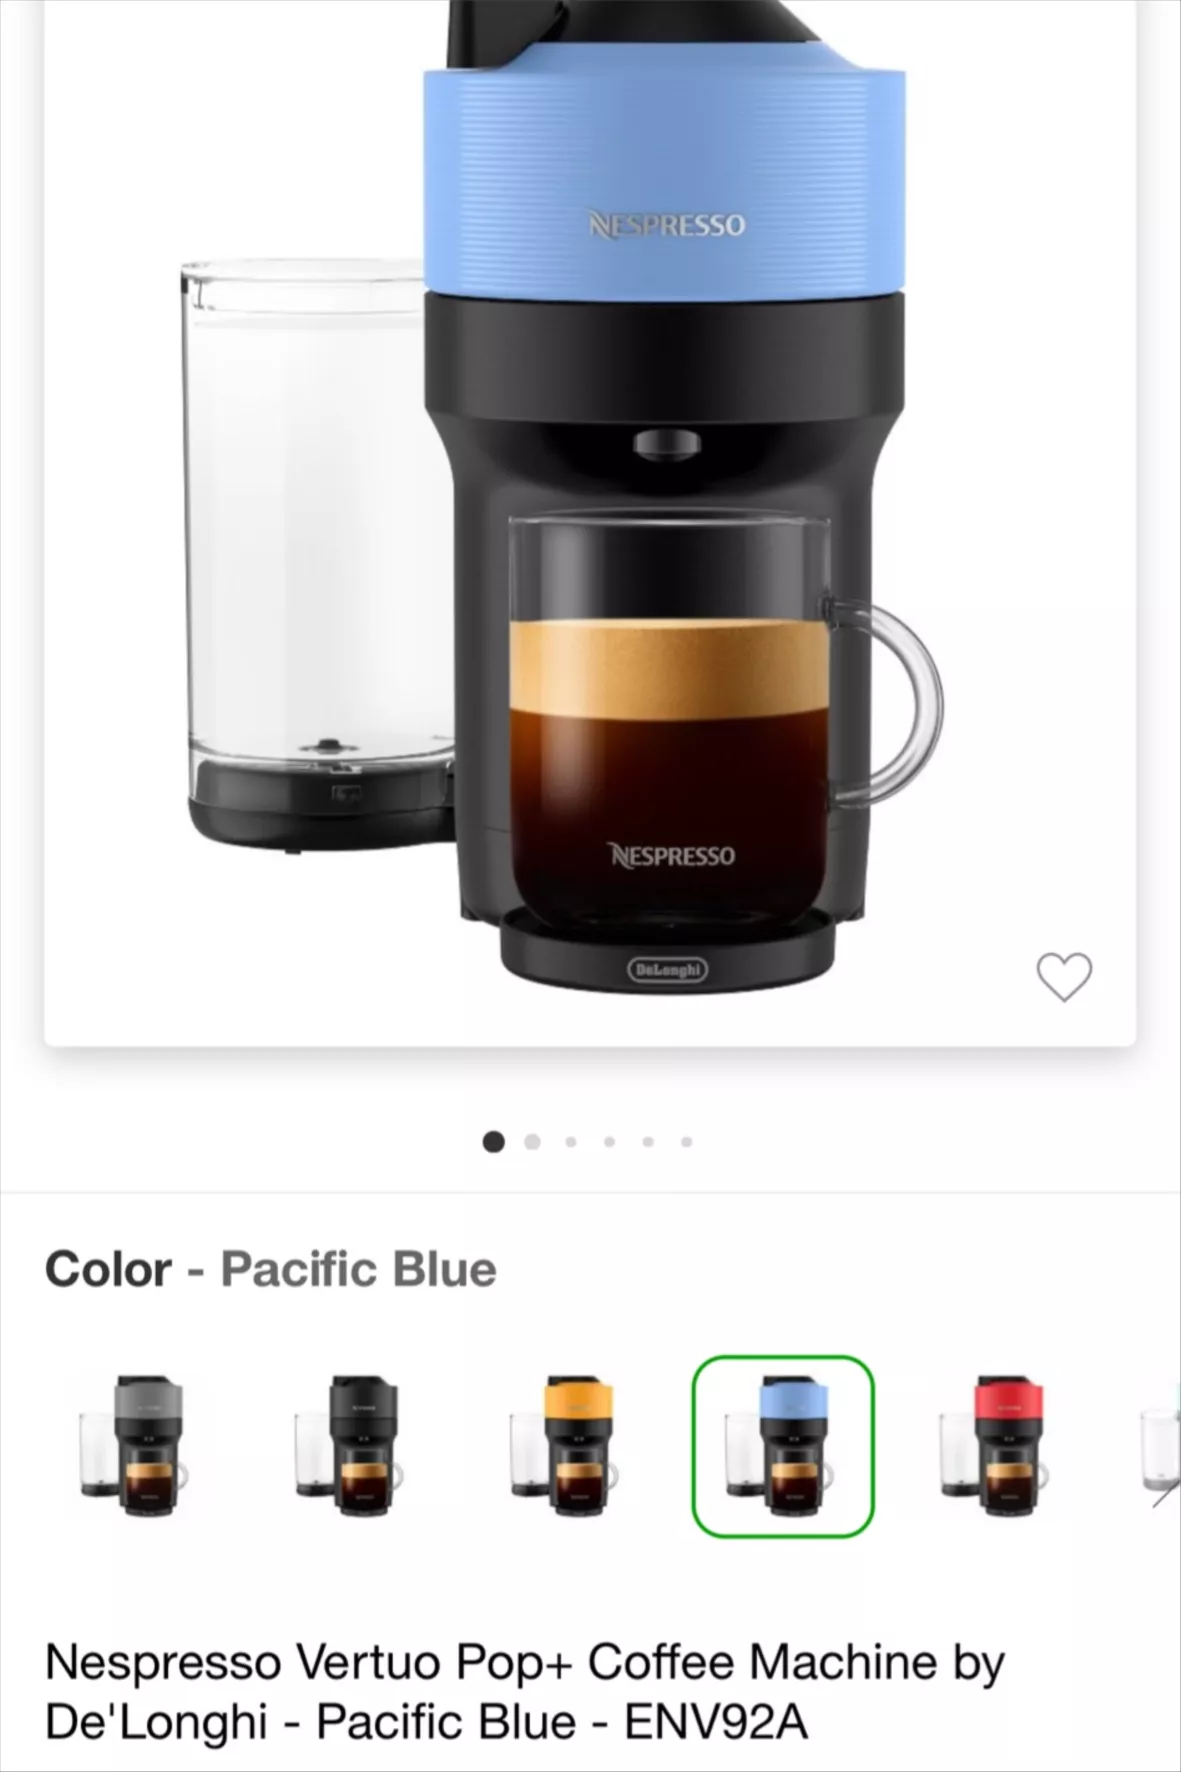 Nespresso Vertuo Pop+ Coffee Machine by De'Longhi - Pacific Blue - ENV92A